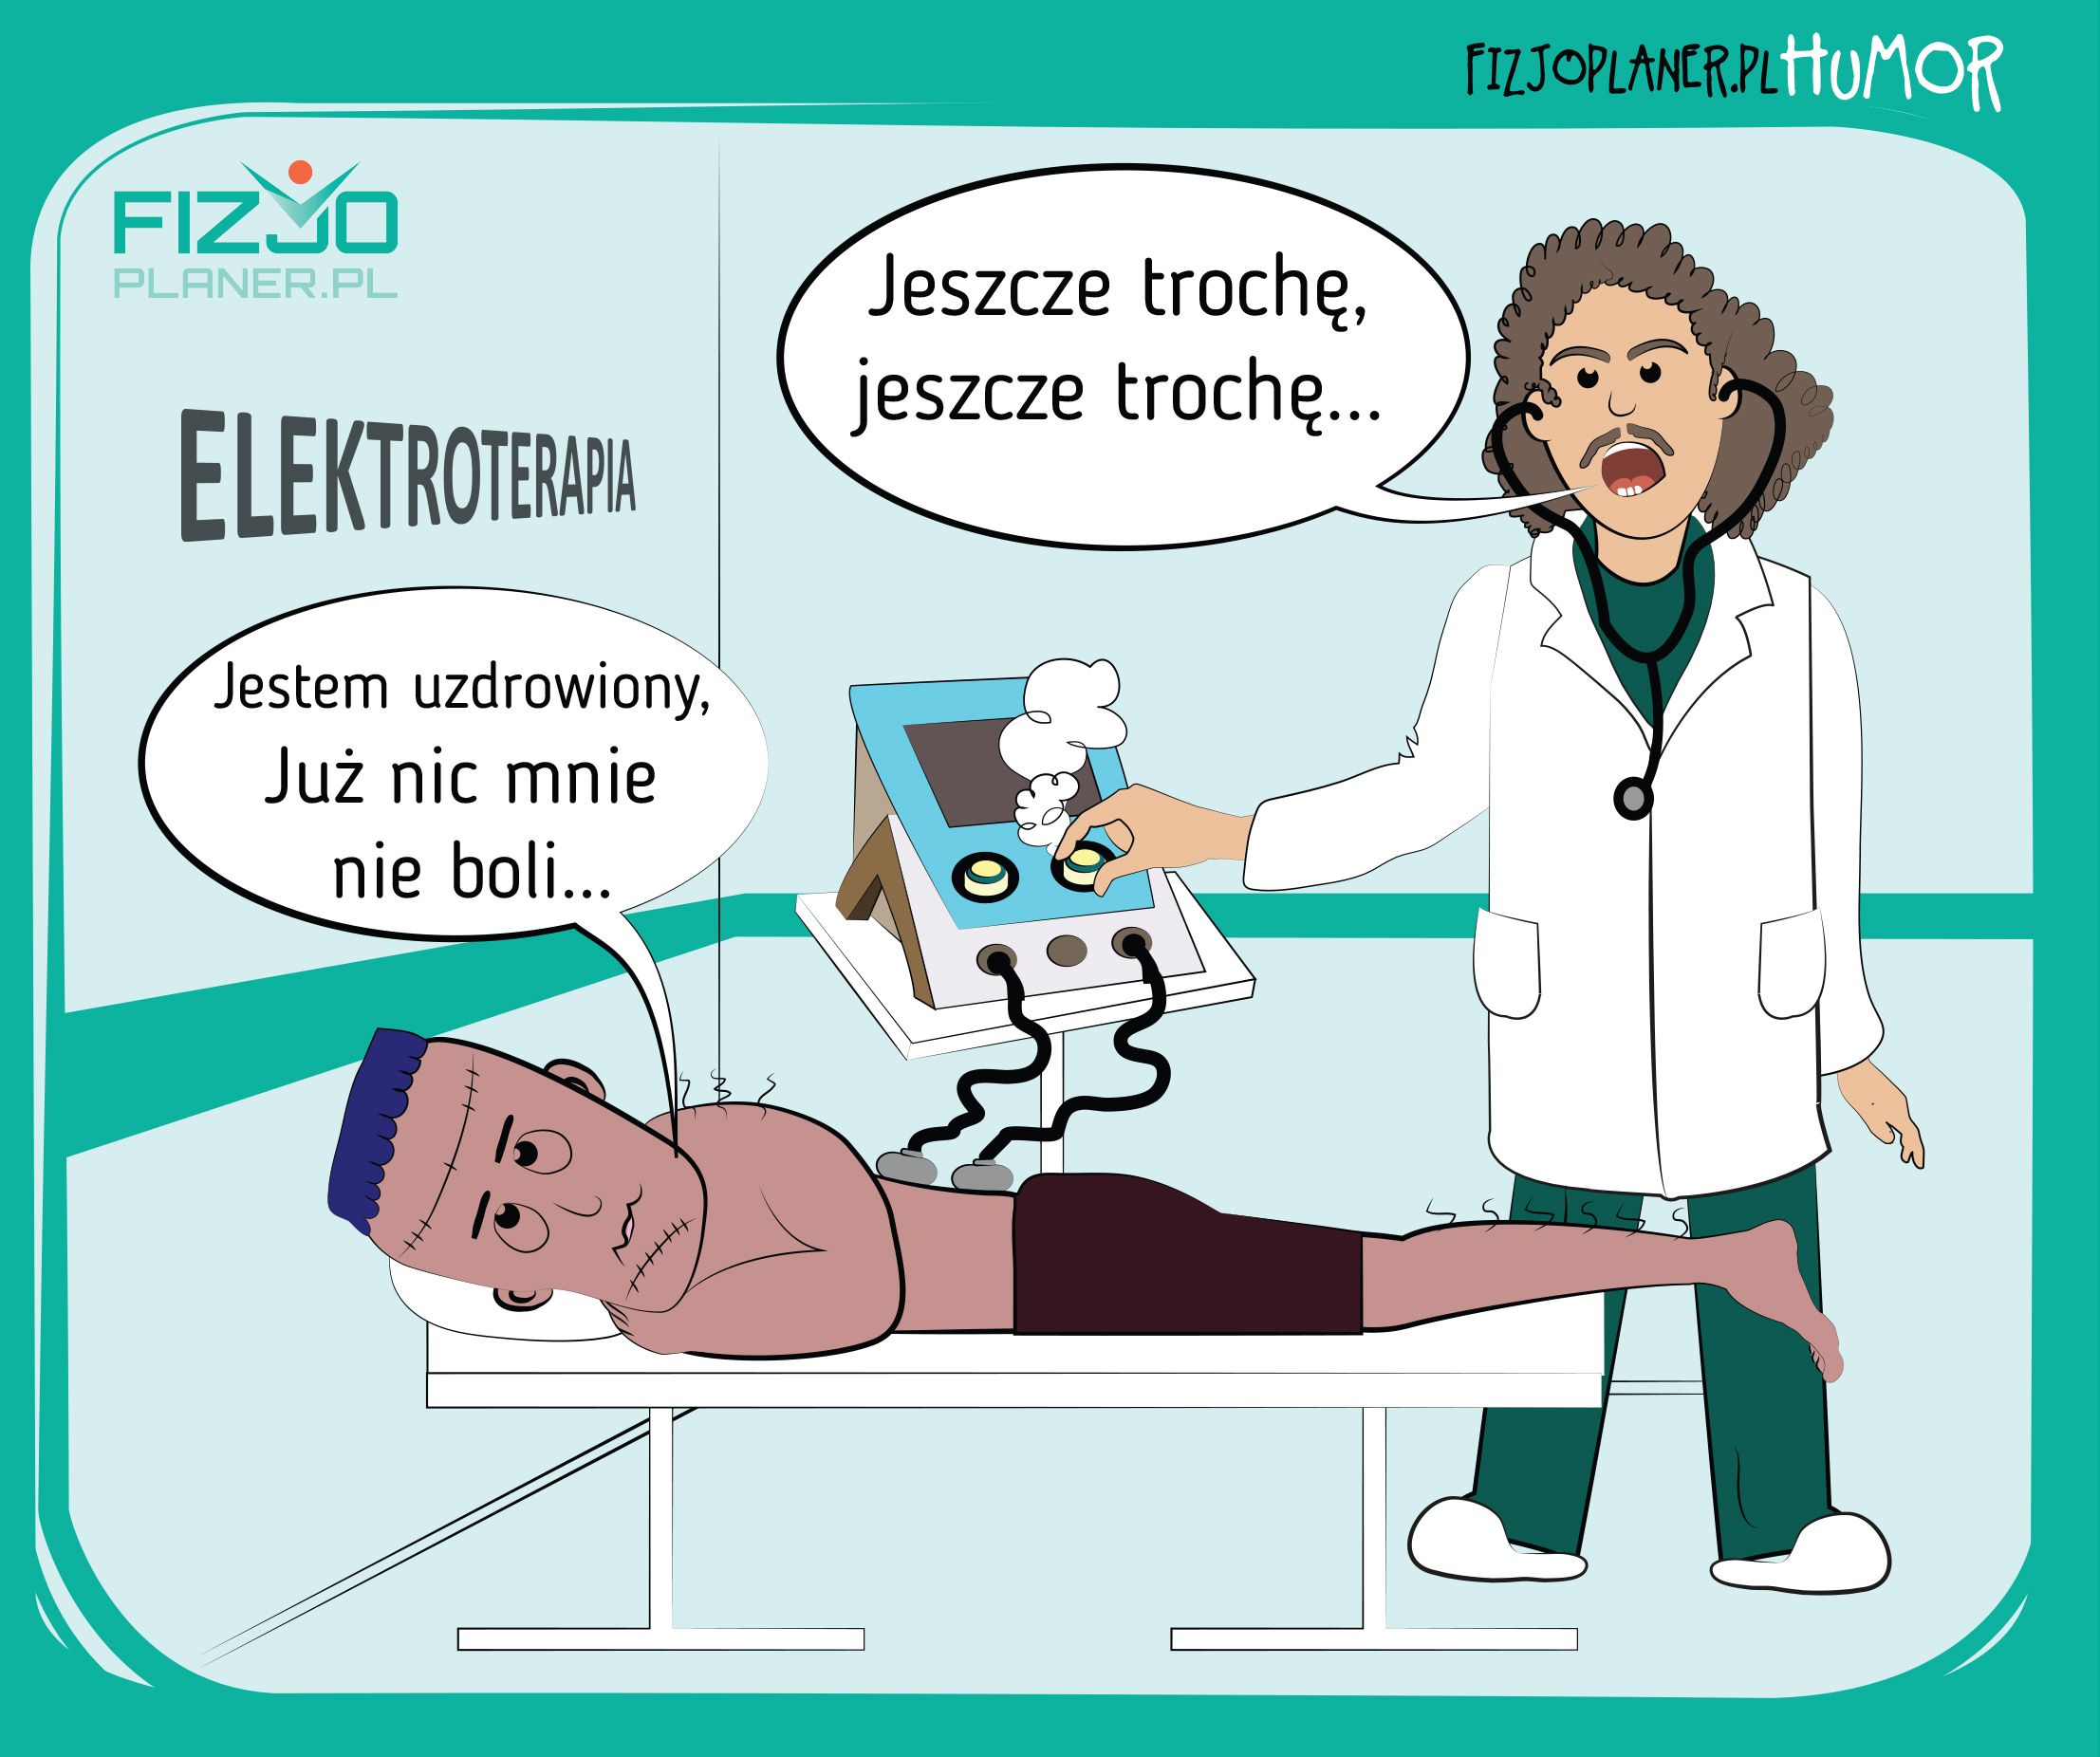 Elektroterapia fizjoplaner.pl/humor